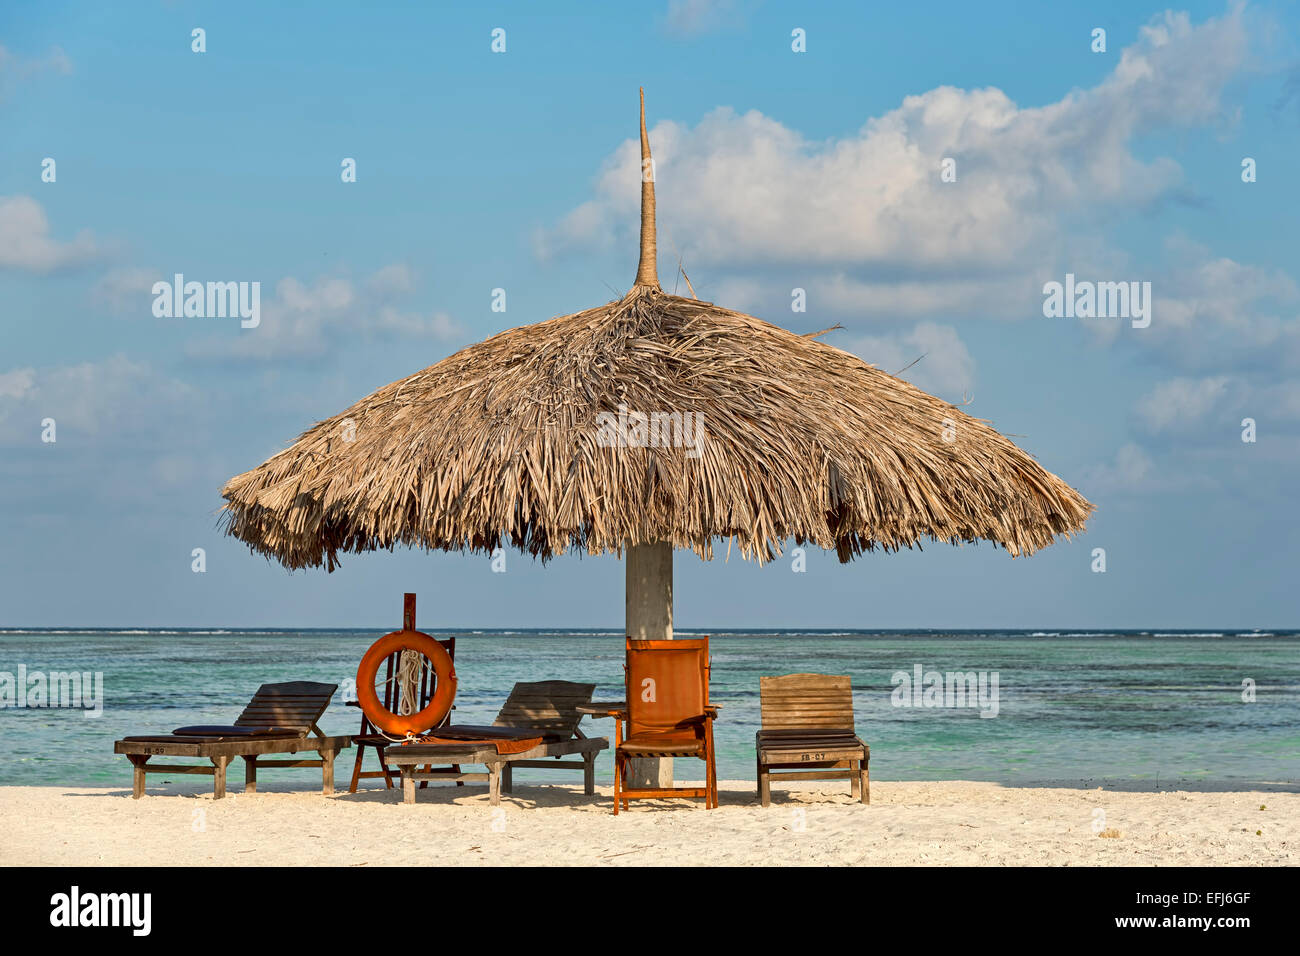 Parasol, sunbeds and a lifebuoy on the beach, Paradise Island, Maldives Stock Photo